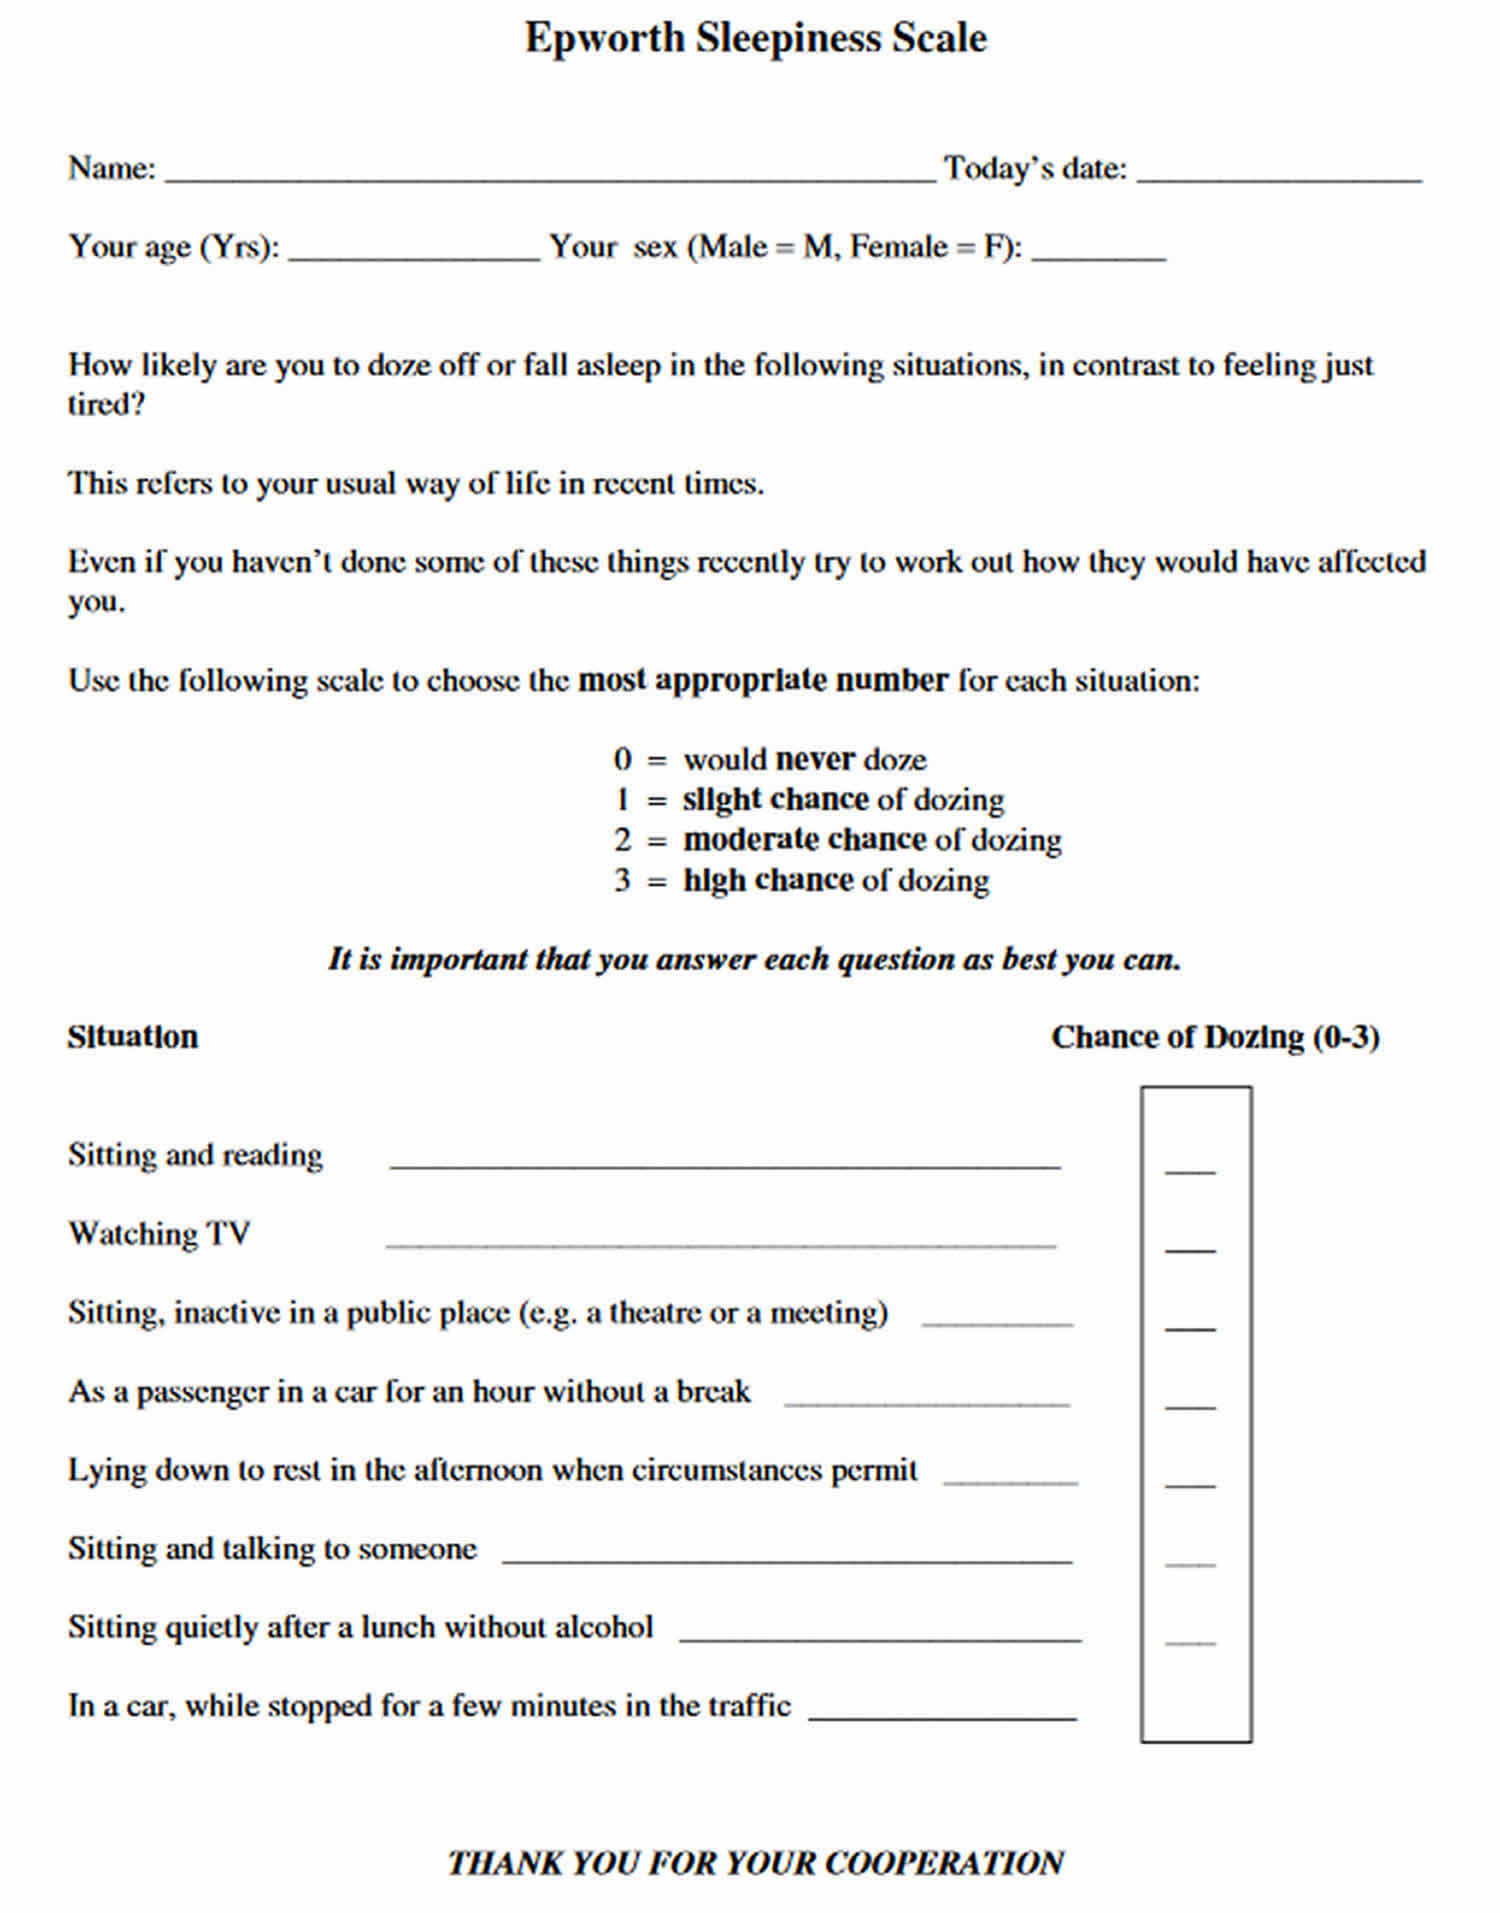 Epworth Sleepiness Questionnaire